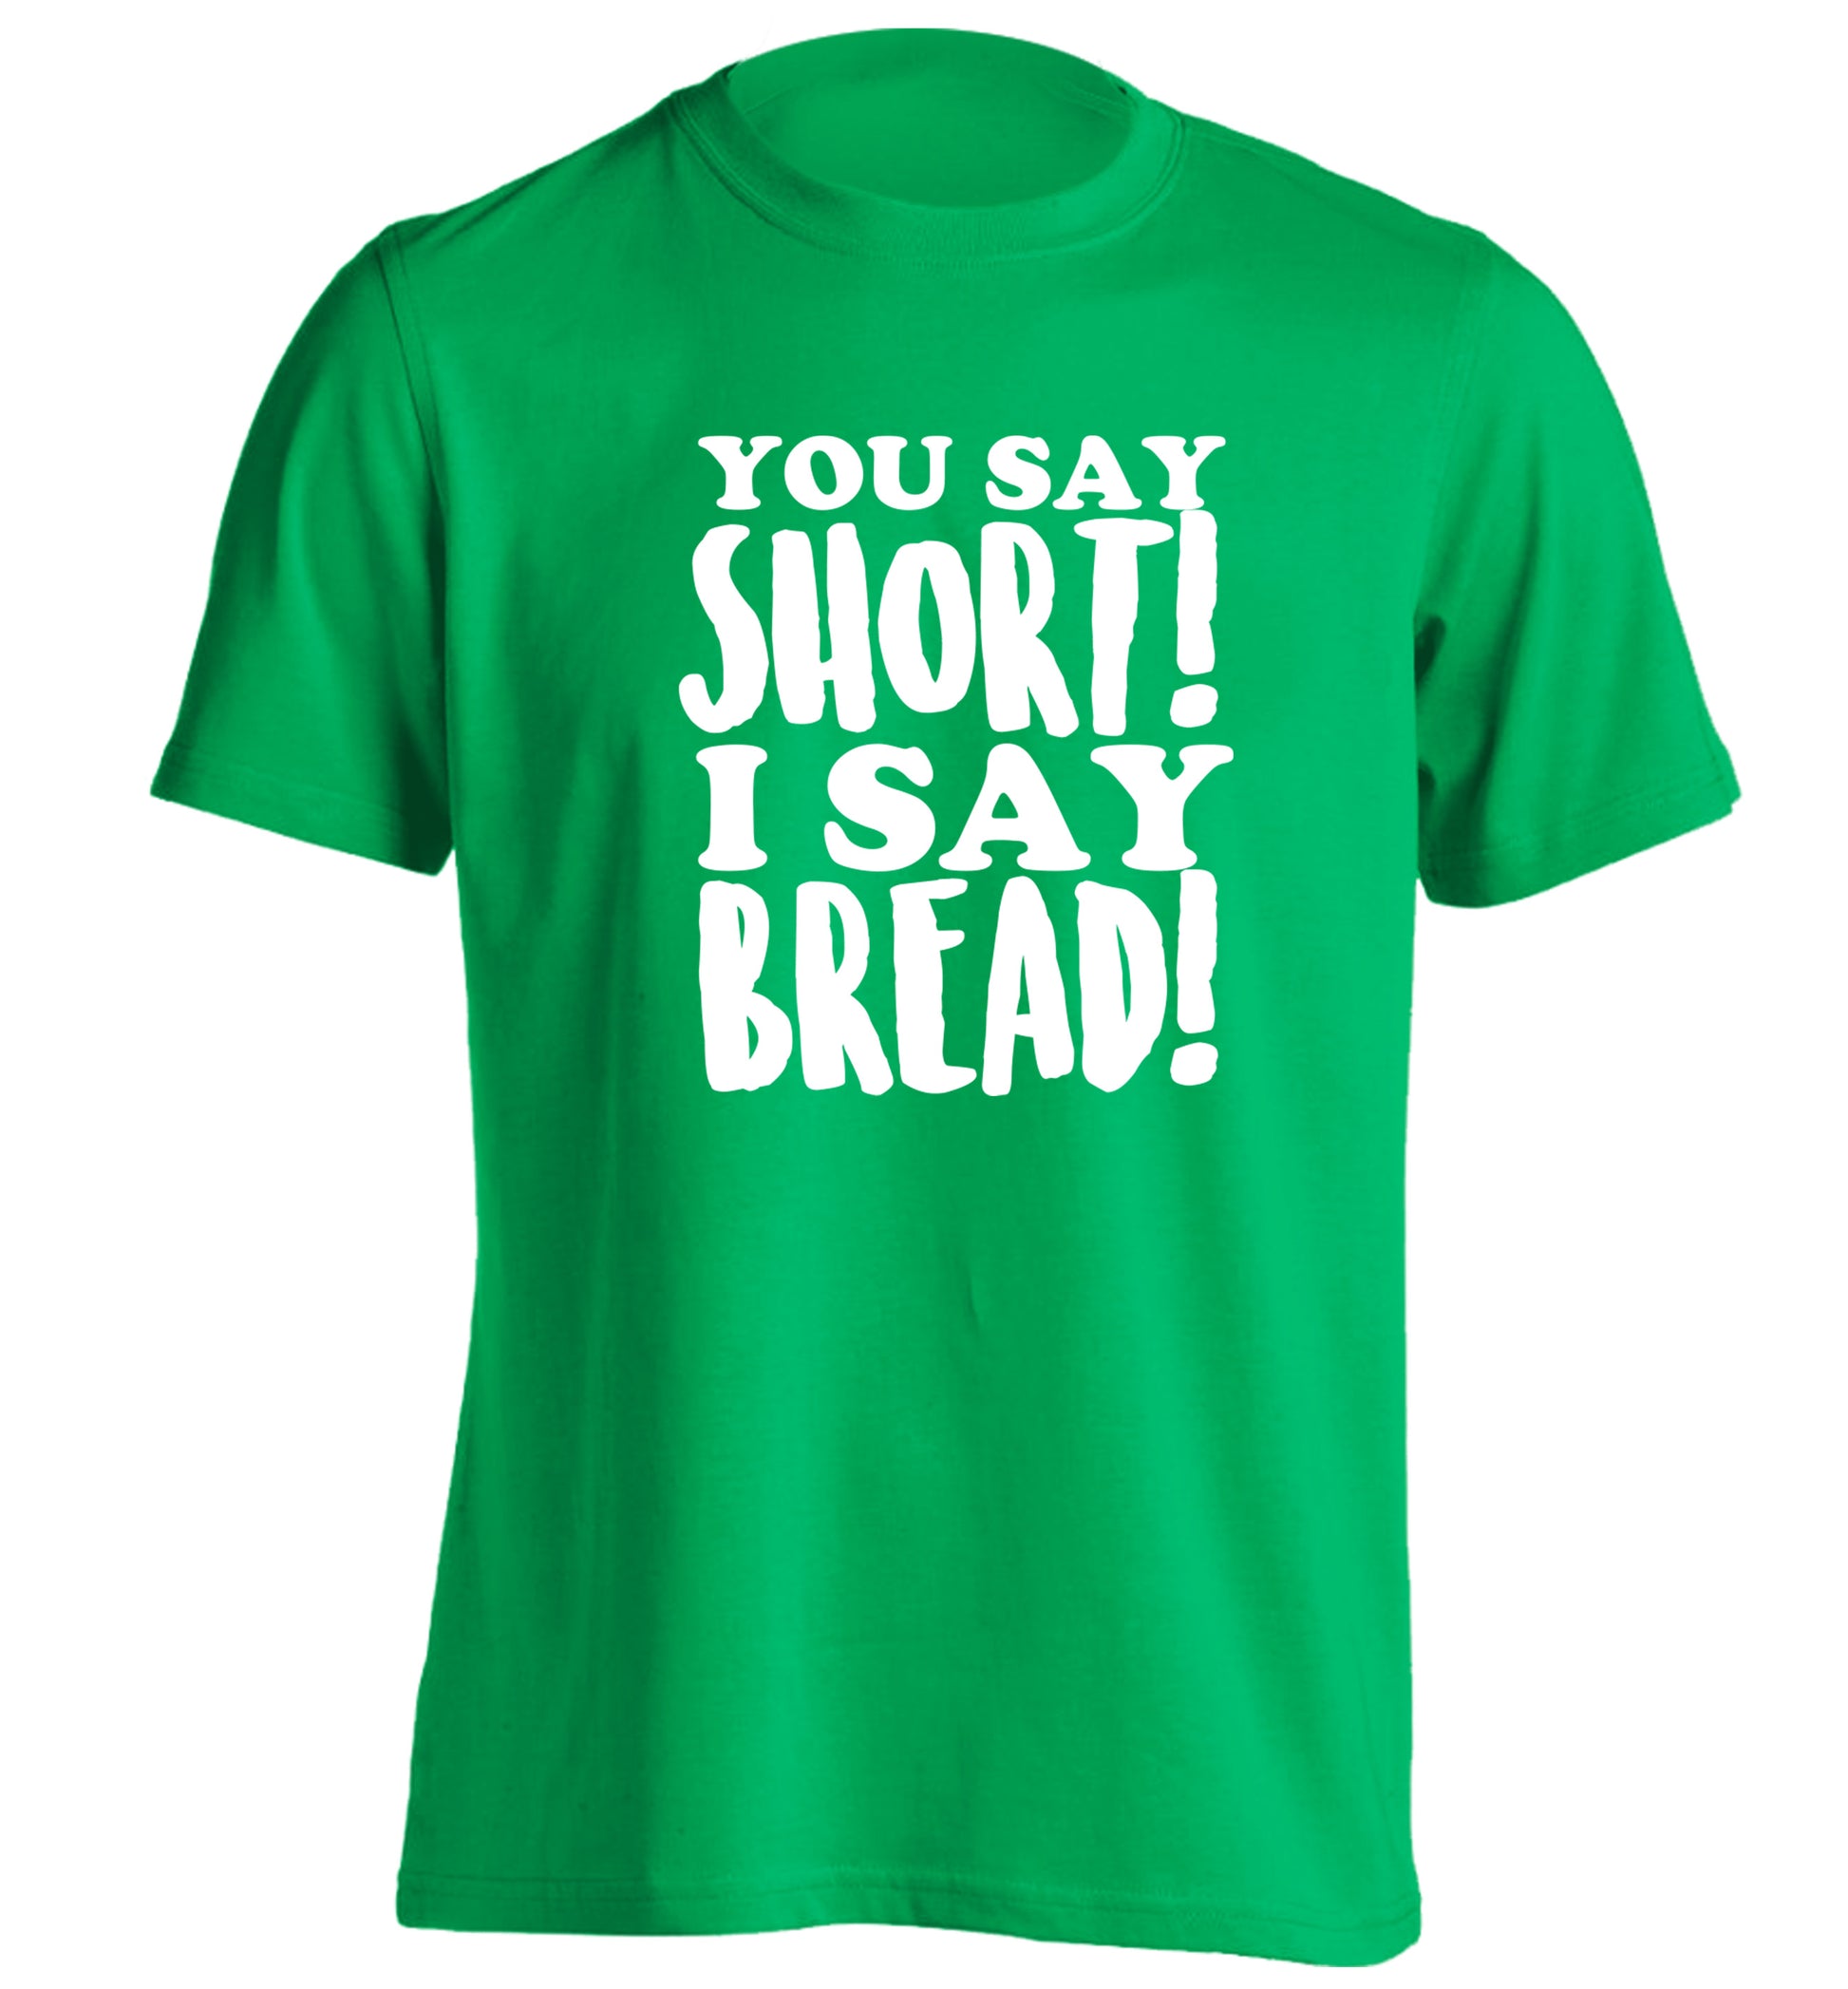 You say short I say bread! adults unisex green Tshirt 2XL